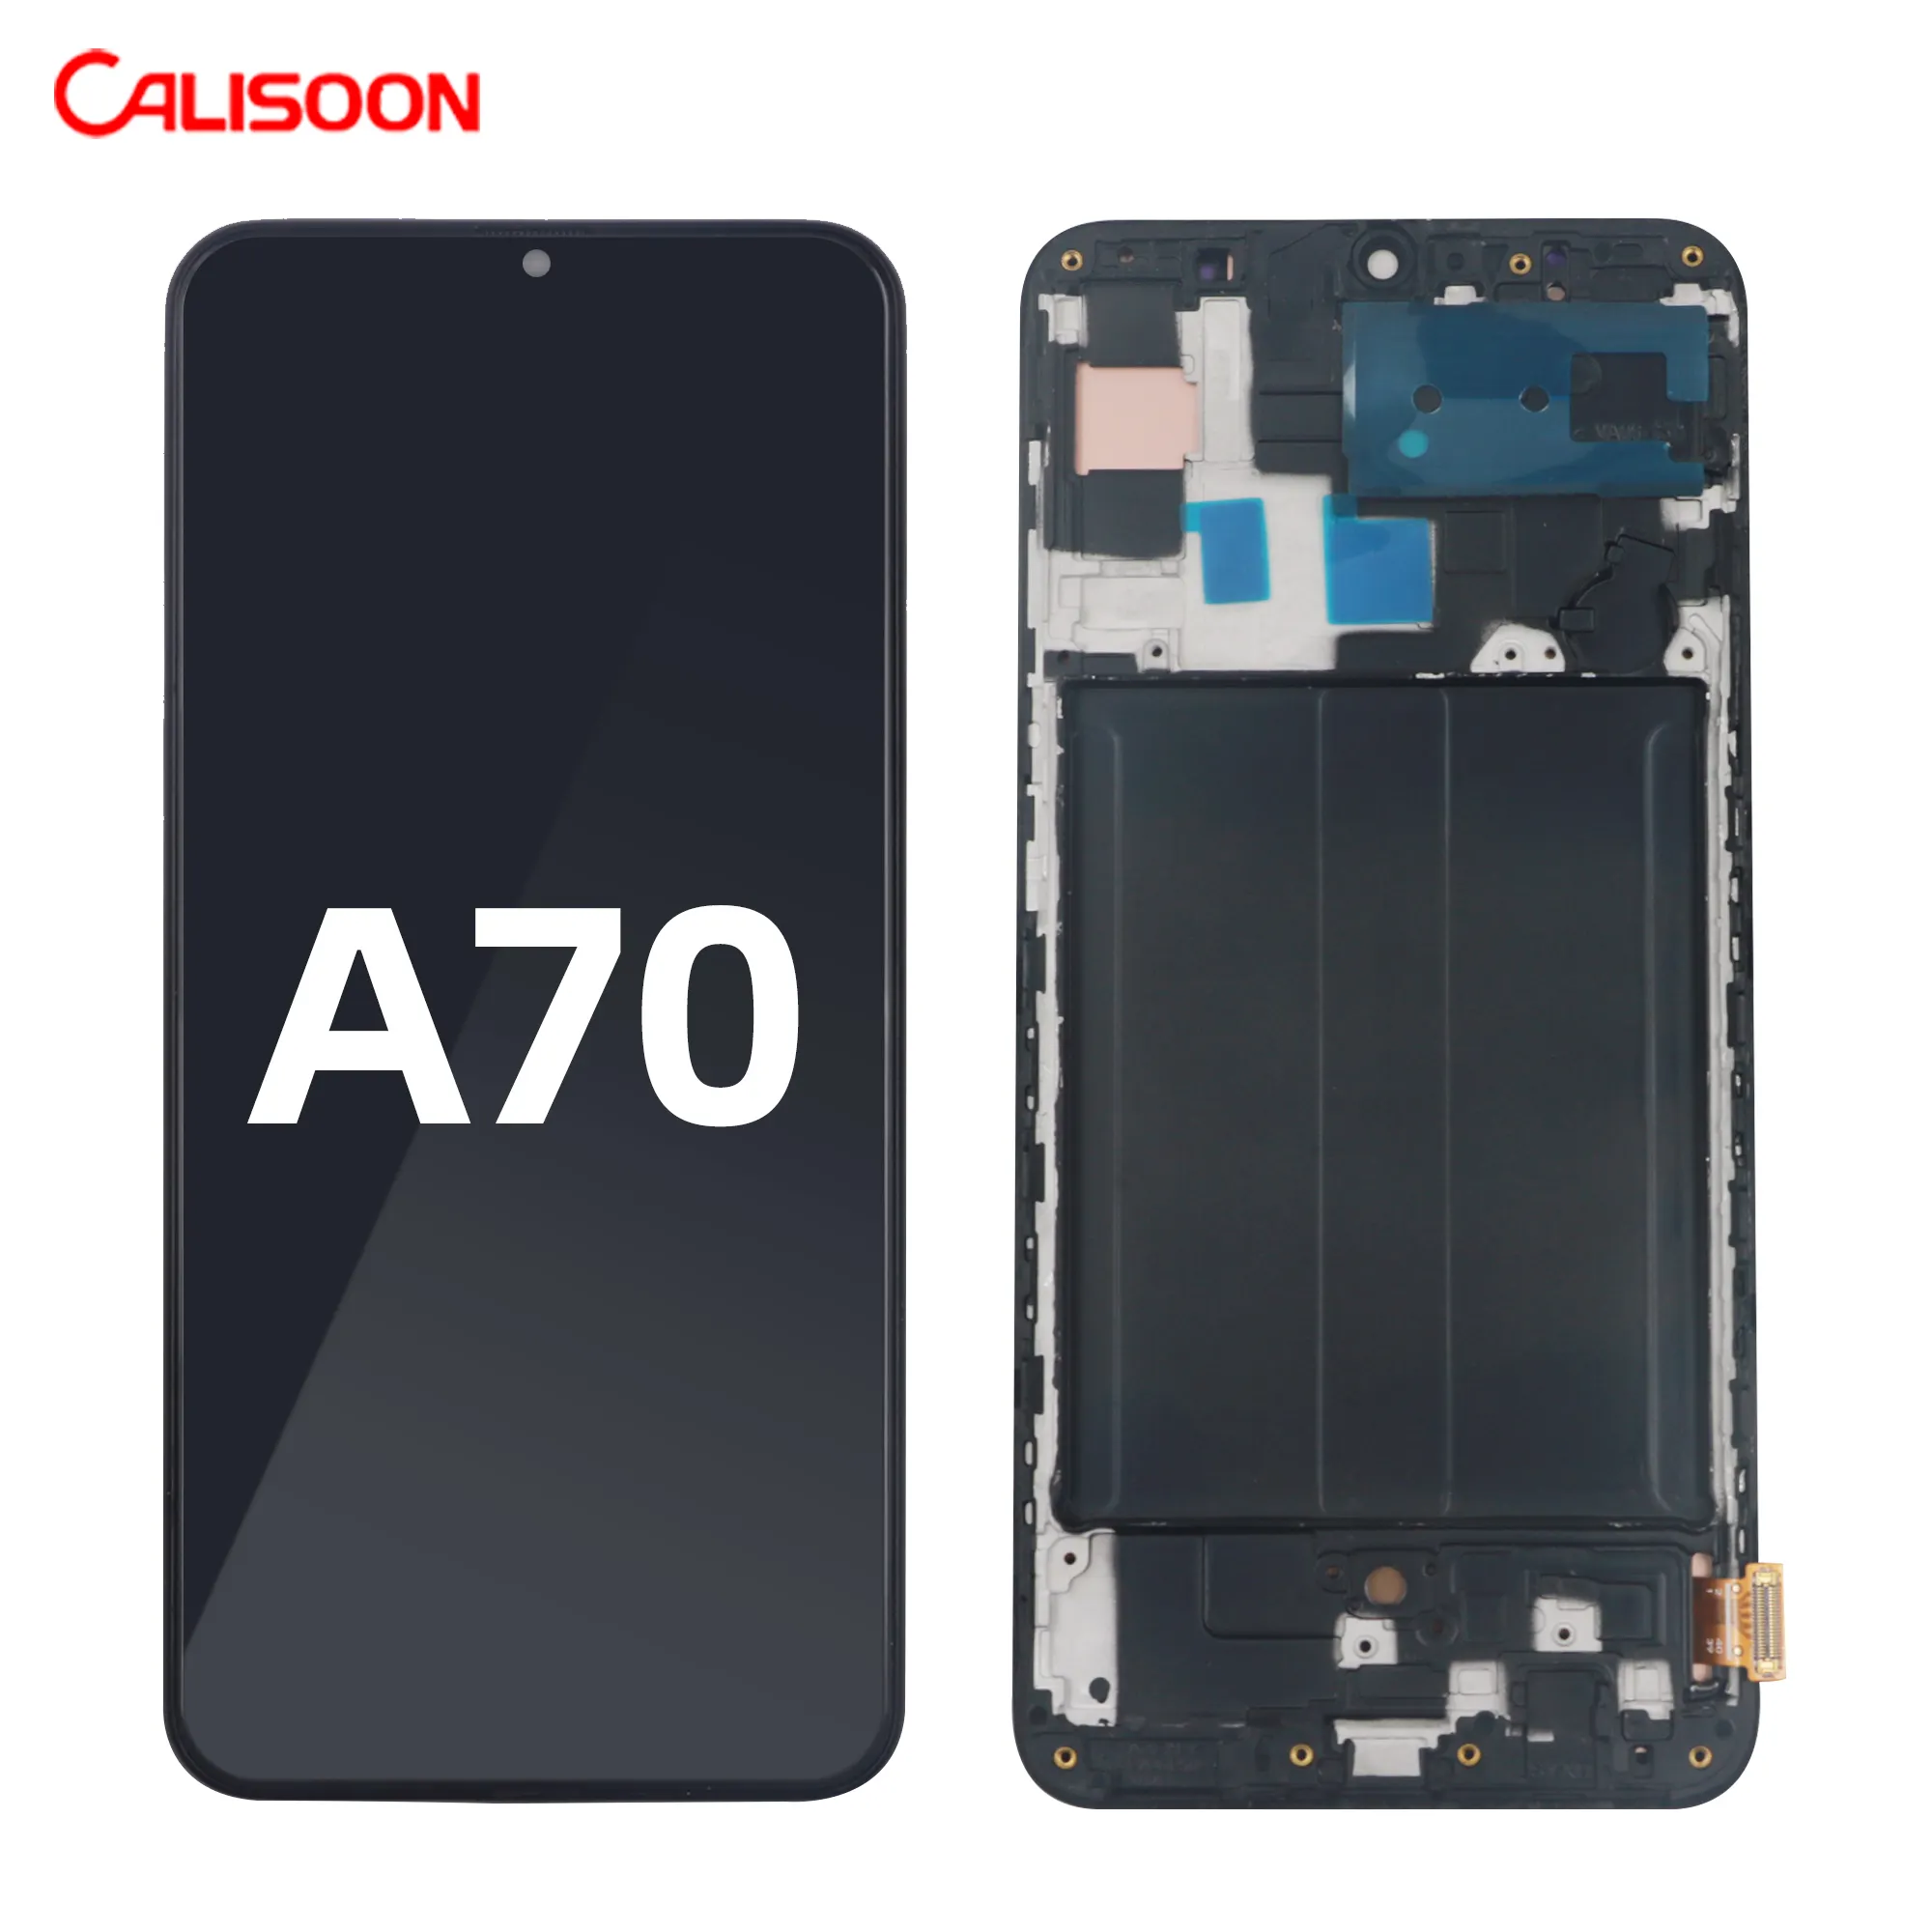 Pantalla lcd para teléfono móvil samsung Galaxy A70, montaje de digitalizador, pantalla táctil de repuesto